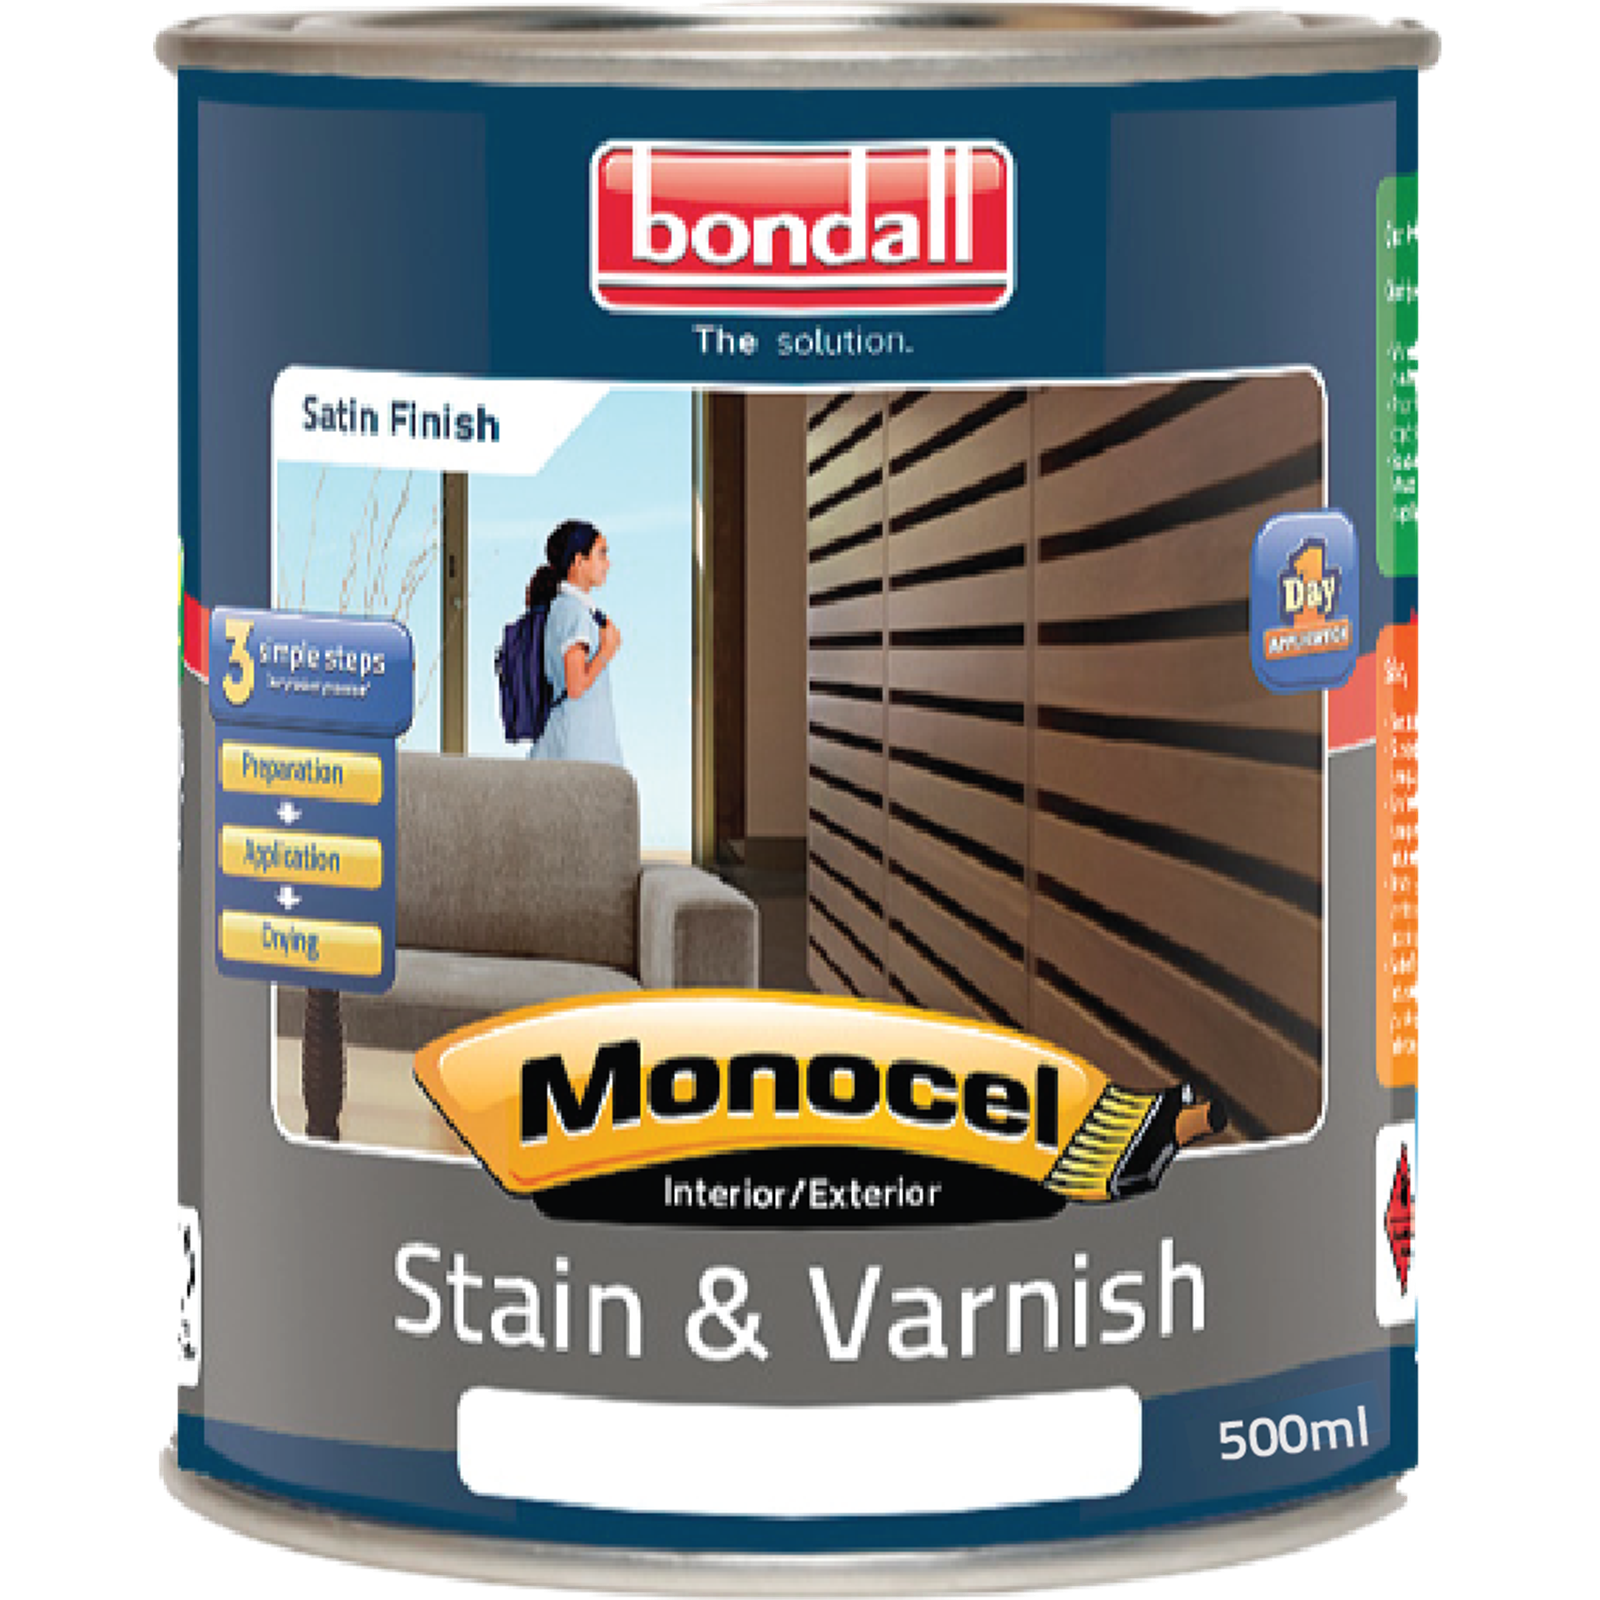 Bondall 500ml Jarrah Monocel Stain And Varnish